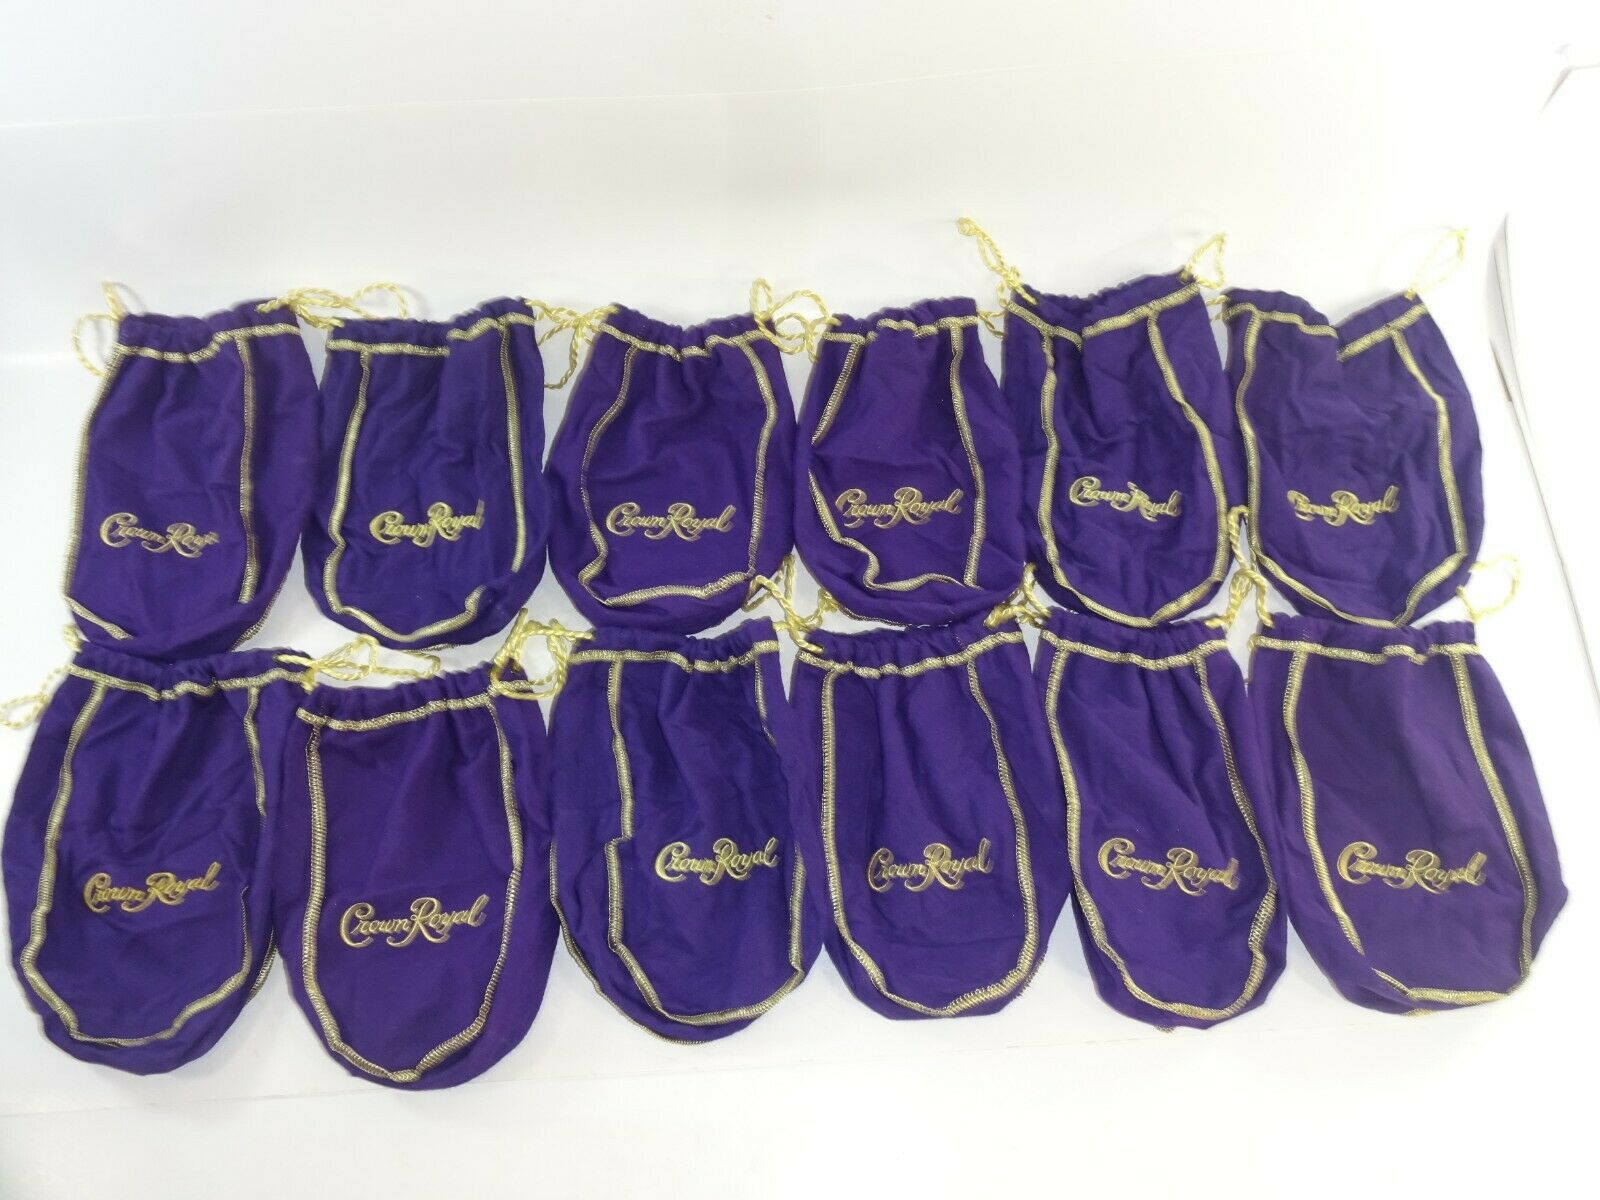 Lot of 12 Crown Royal 750ml / 1 liter Med Size Purple Drawstring Bags 8-9